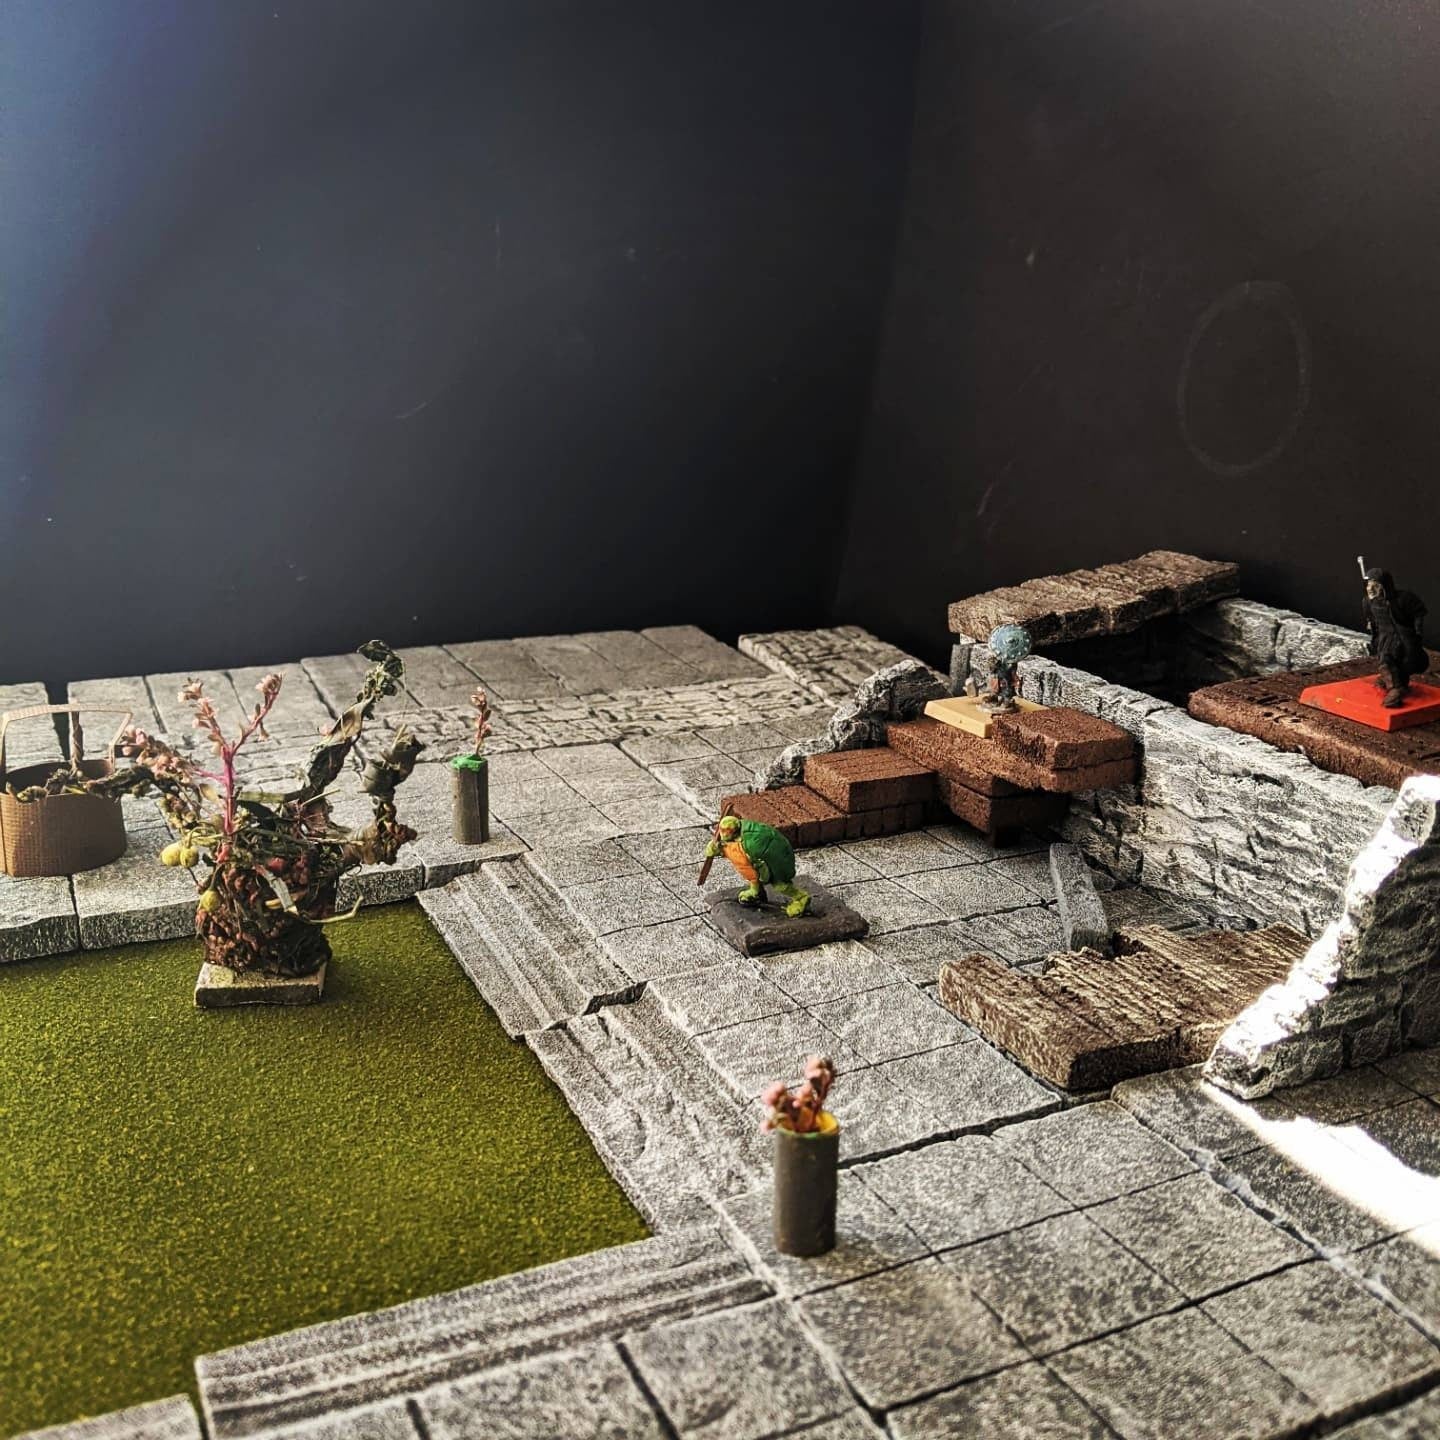 Dungeon Tile Starter Set for Dungeons and Dragons, Tabletop games, Warhammer 40k, Age of Sigmar, Wargaming